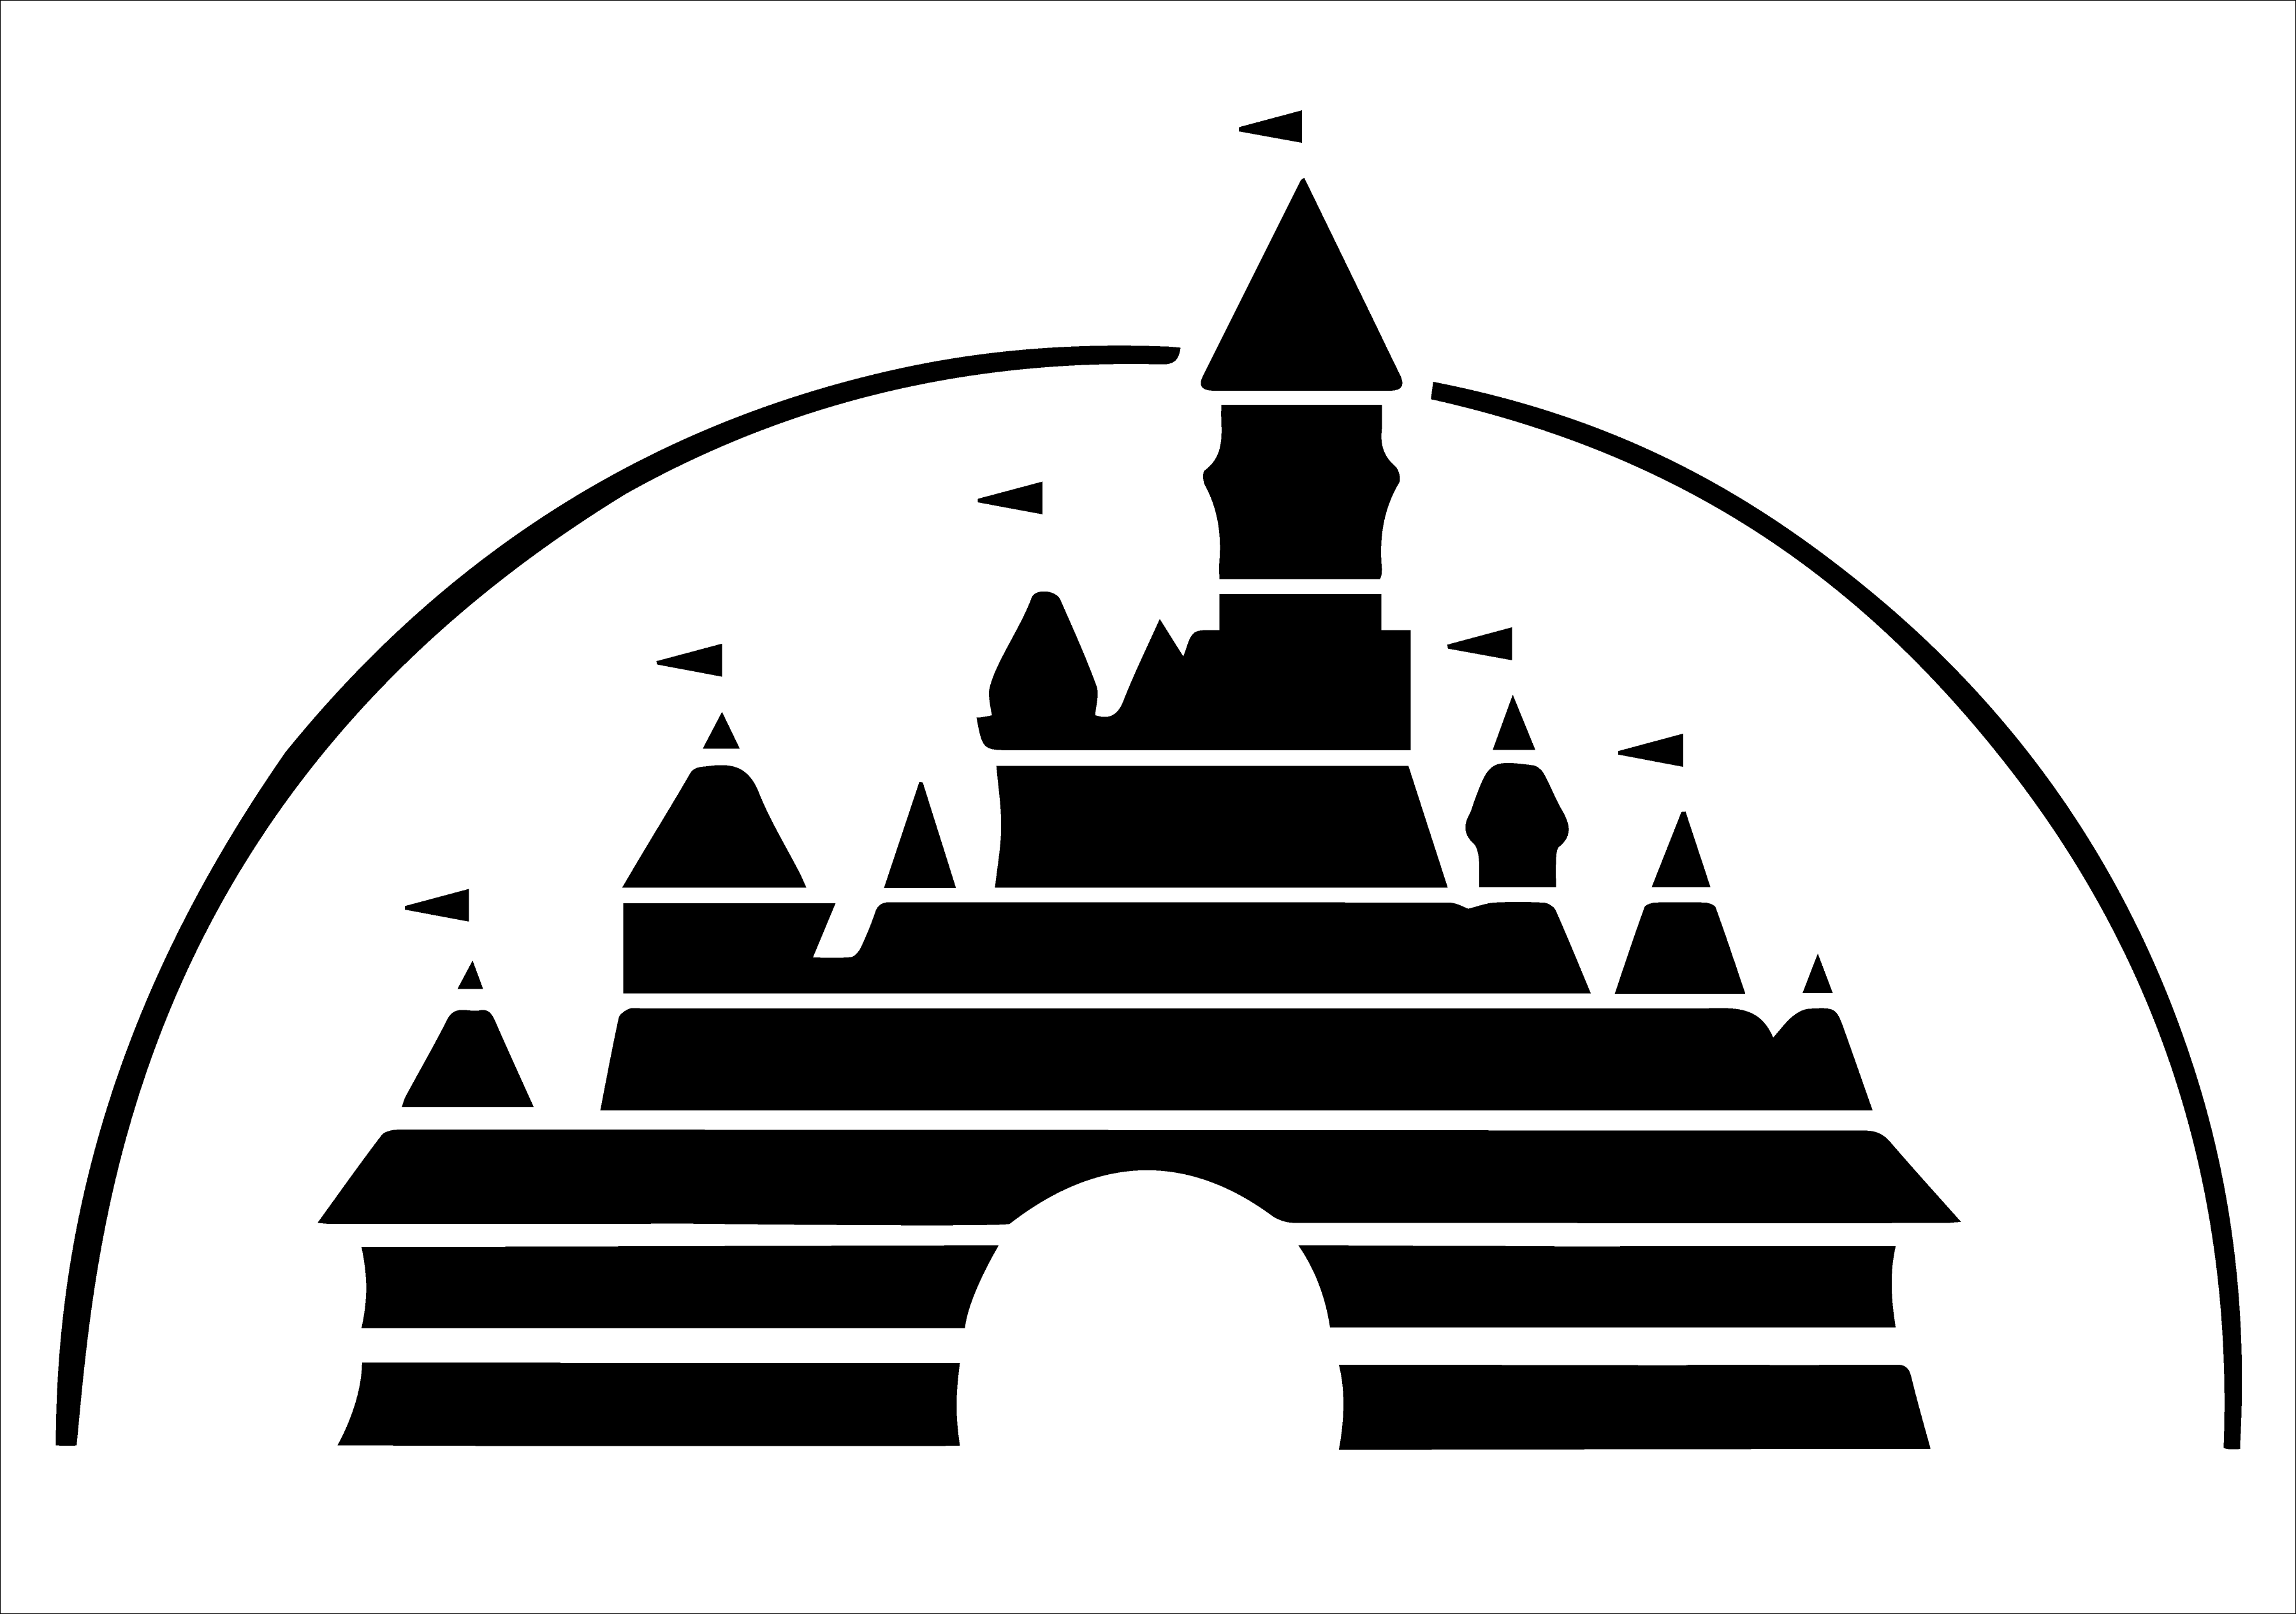 Immagine del PNG del logo del castello Disney